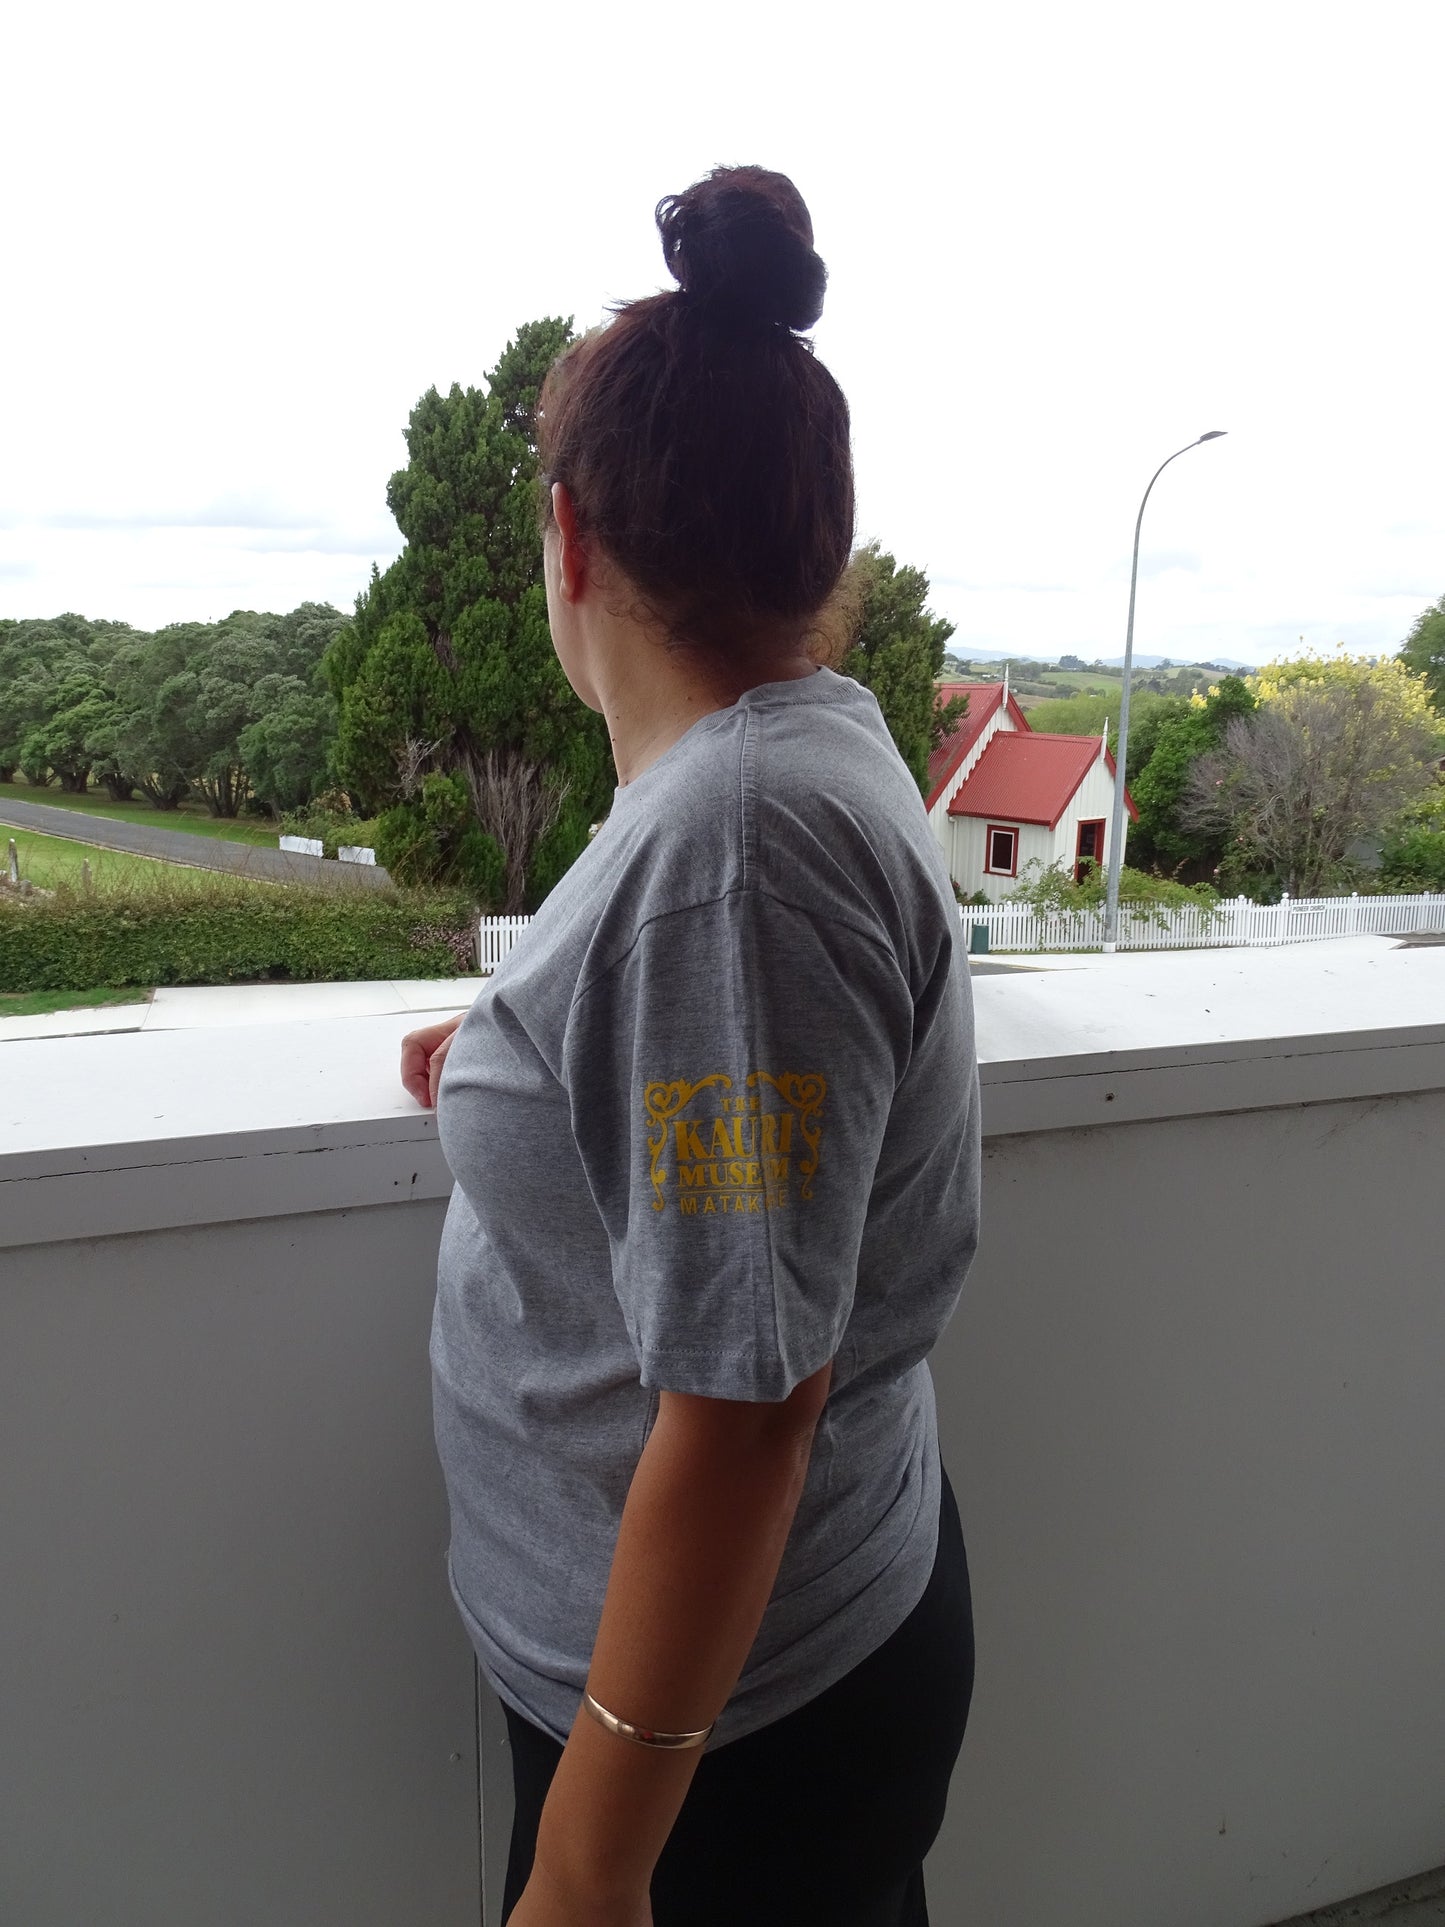 The Kauri Museum T Shirt